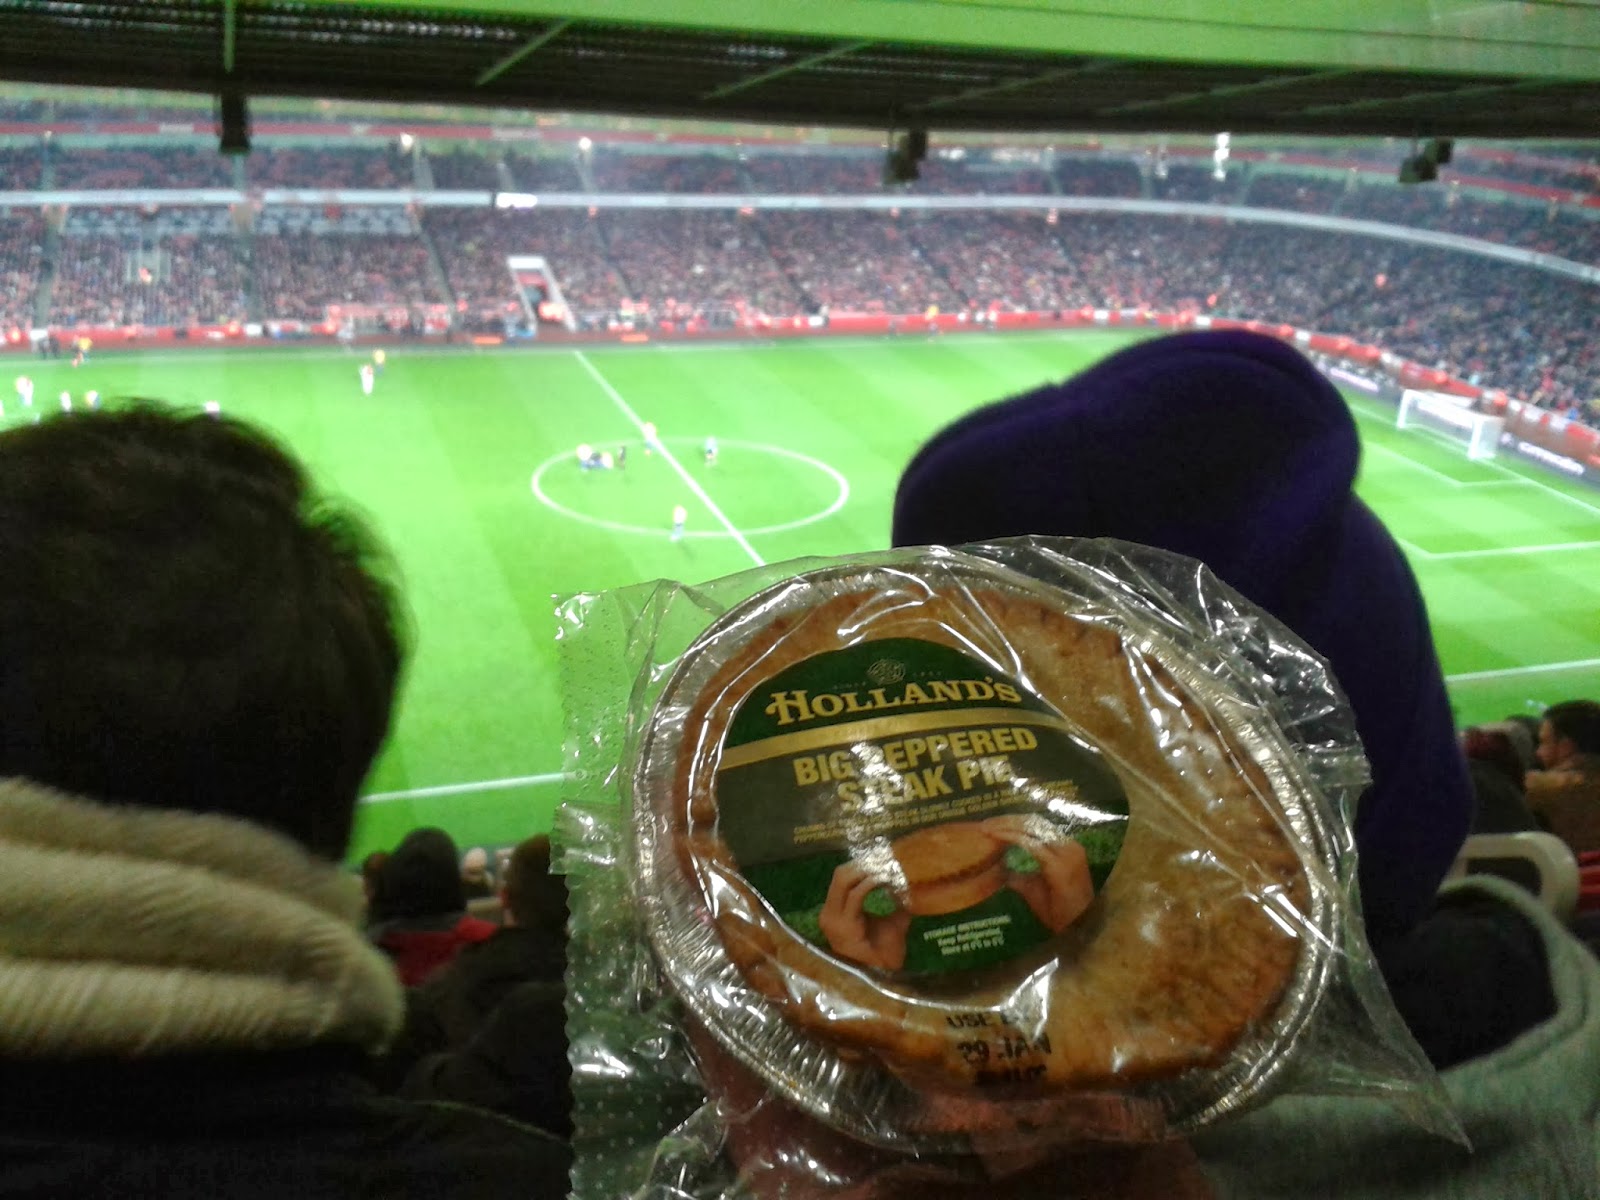 Holland's Big Peppered Steak Pie at the Emirates Stadium, Arsenal